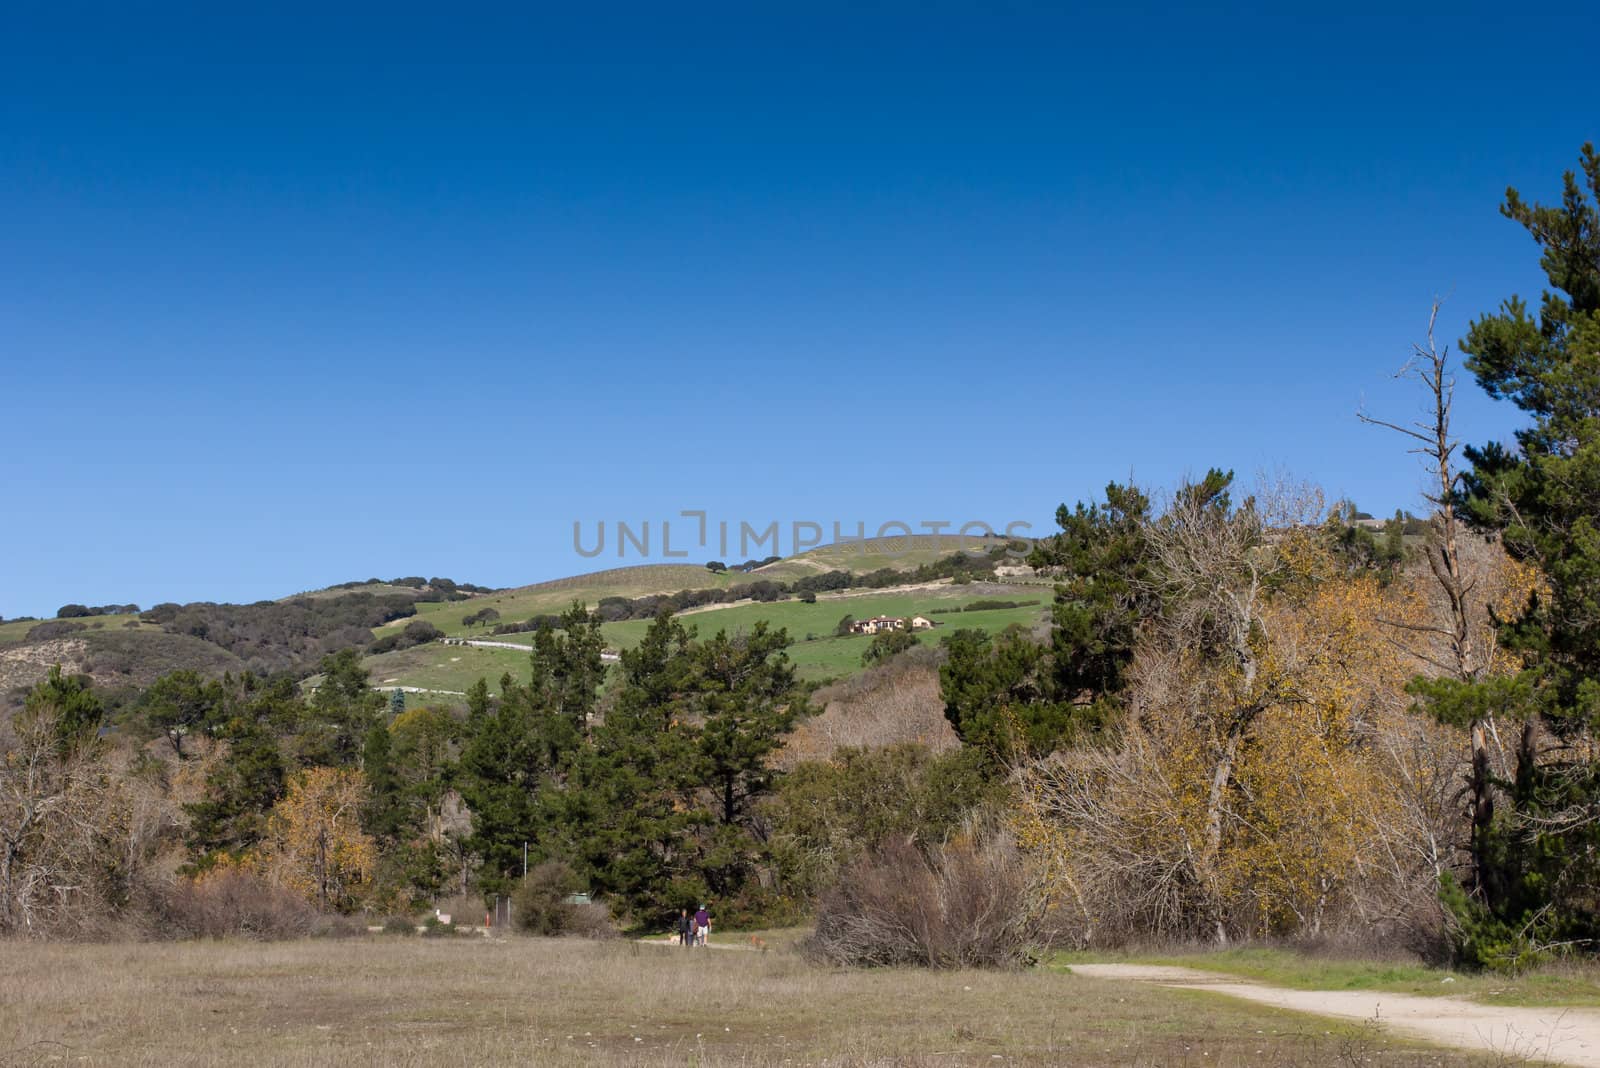 Hills Overlooking Garland Ranch Regional Park by wolterk